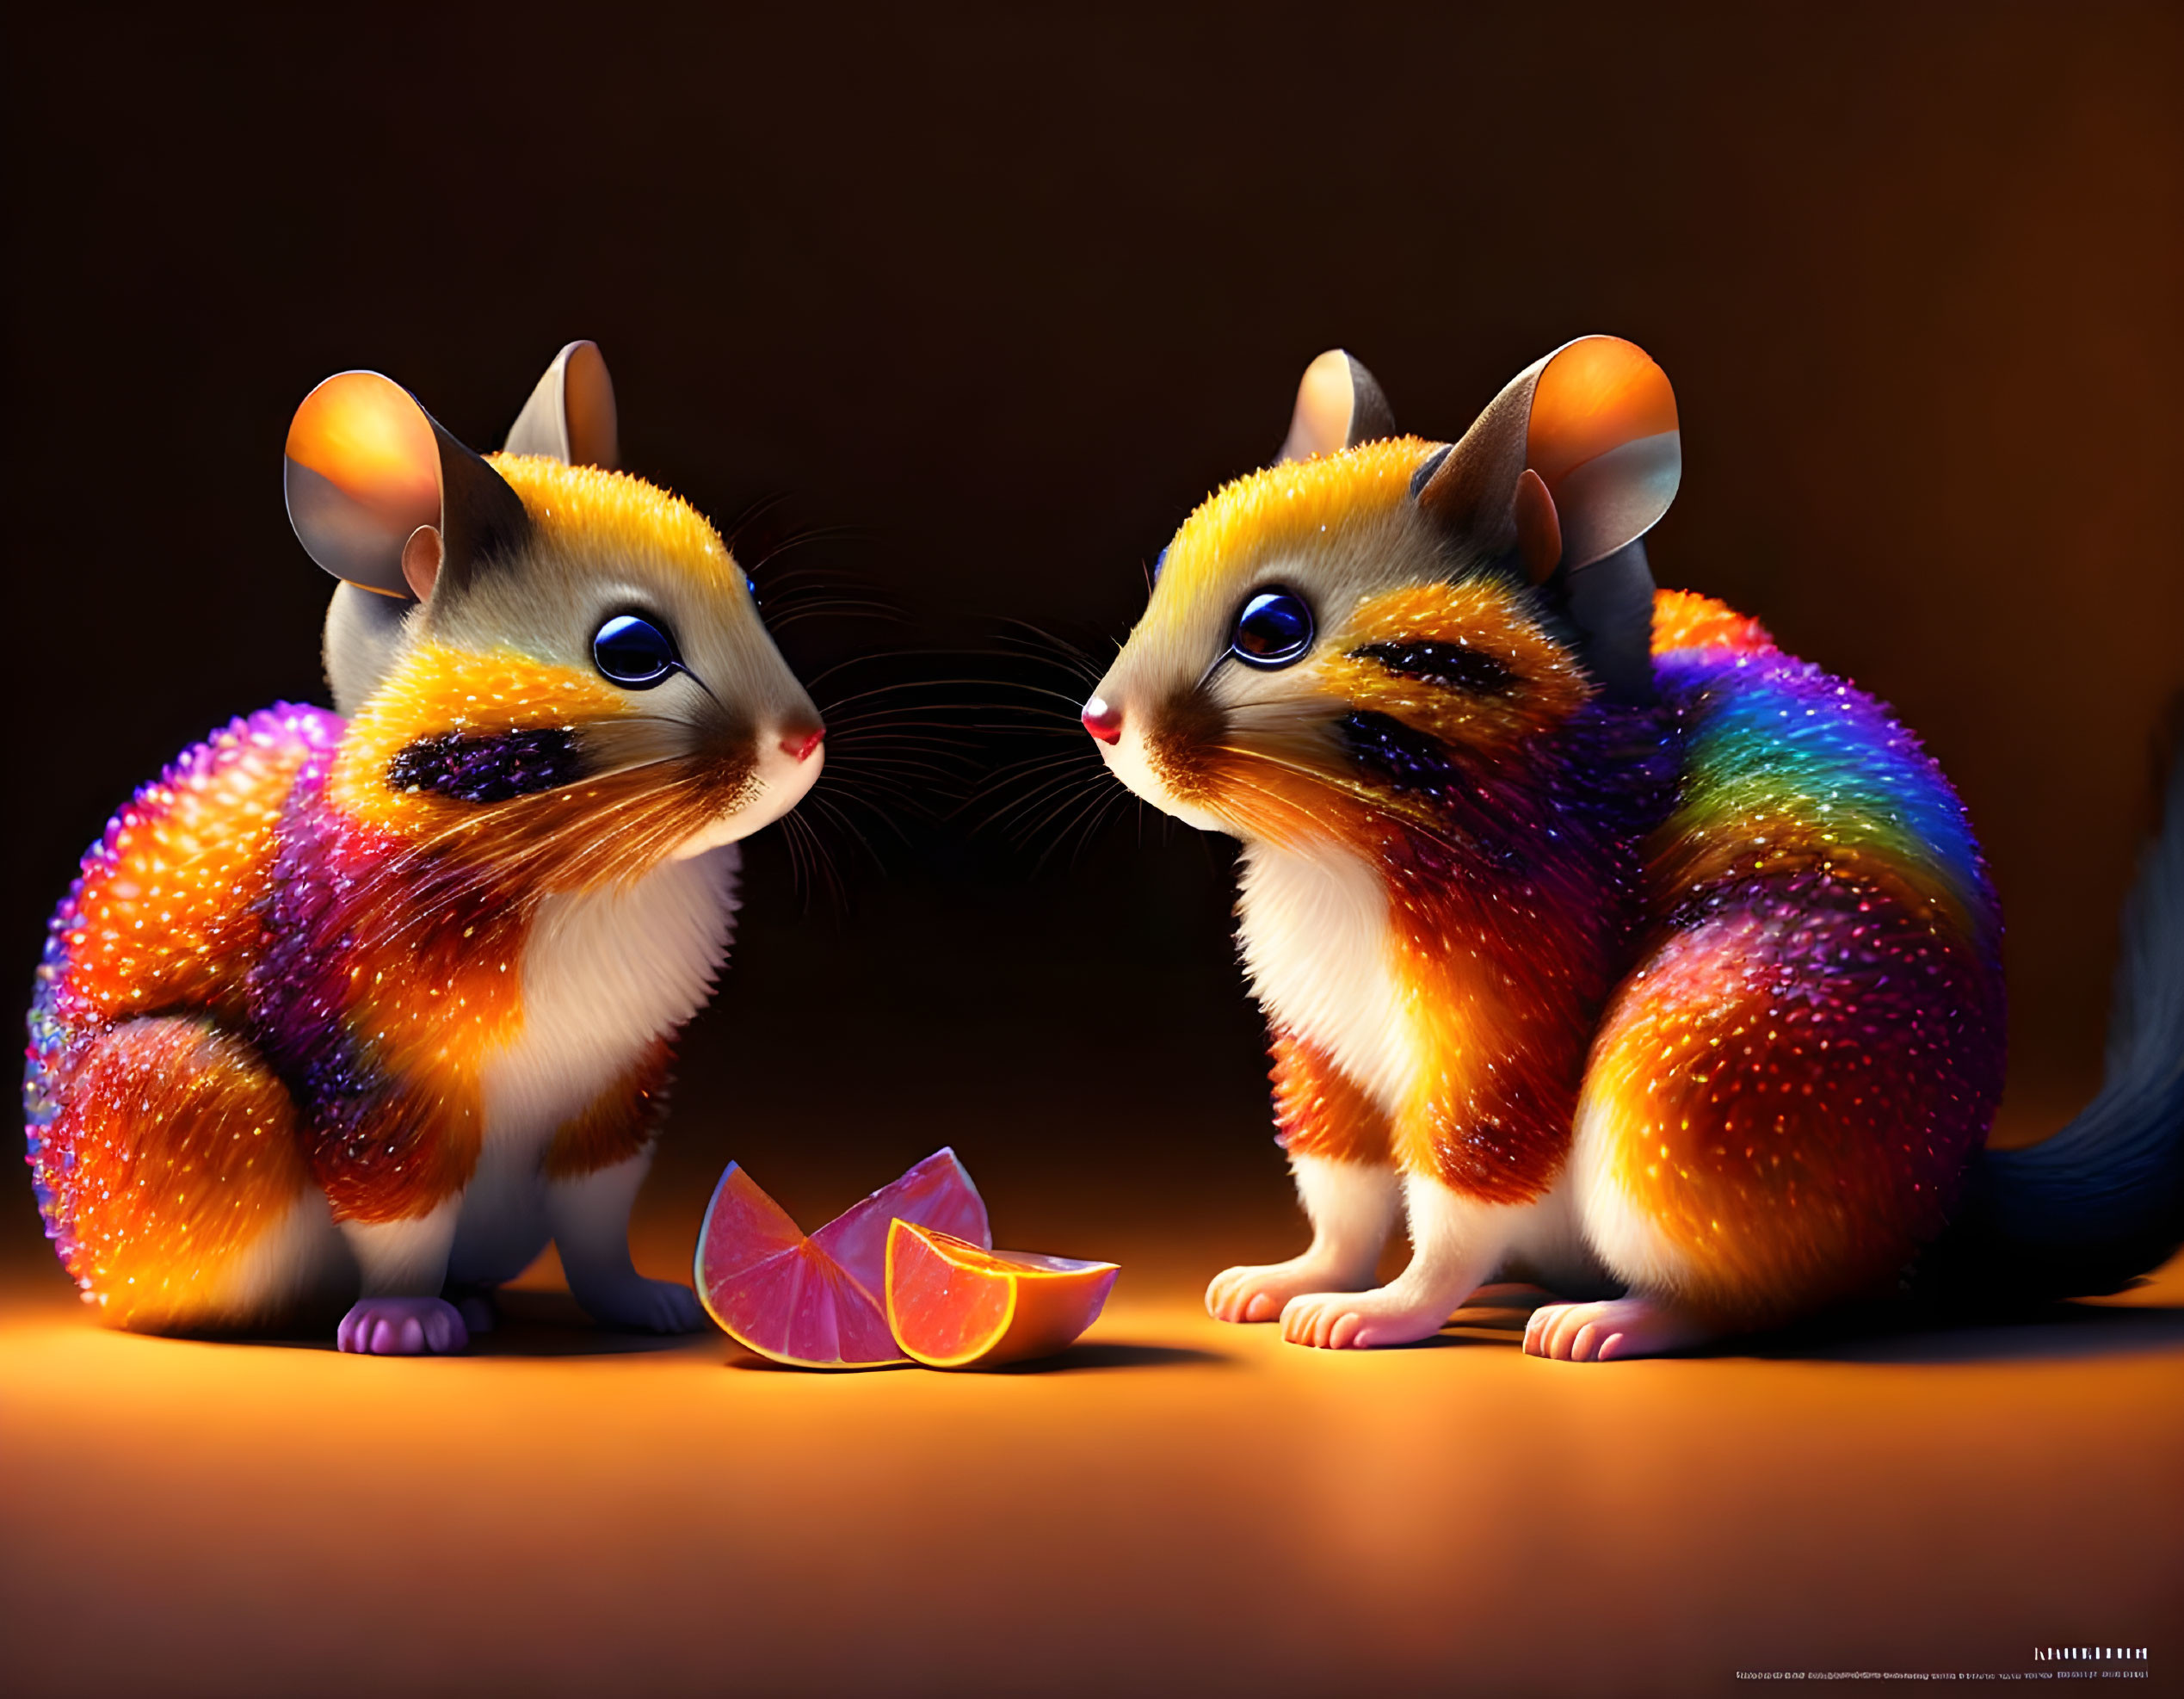 Colorful animated chipmunk-like creatures sharing orange slice on dark background